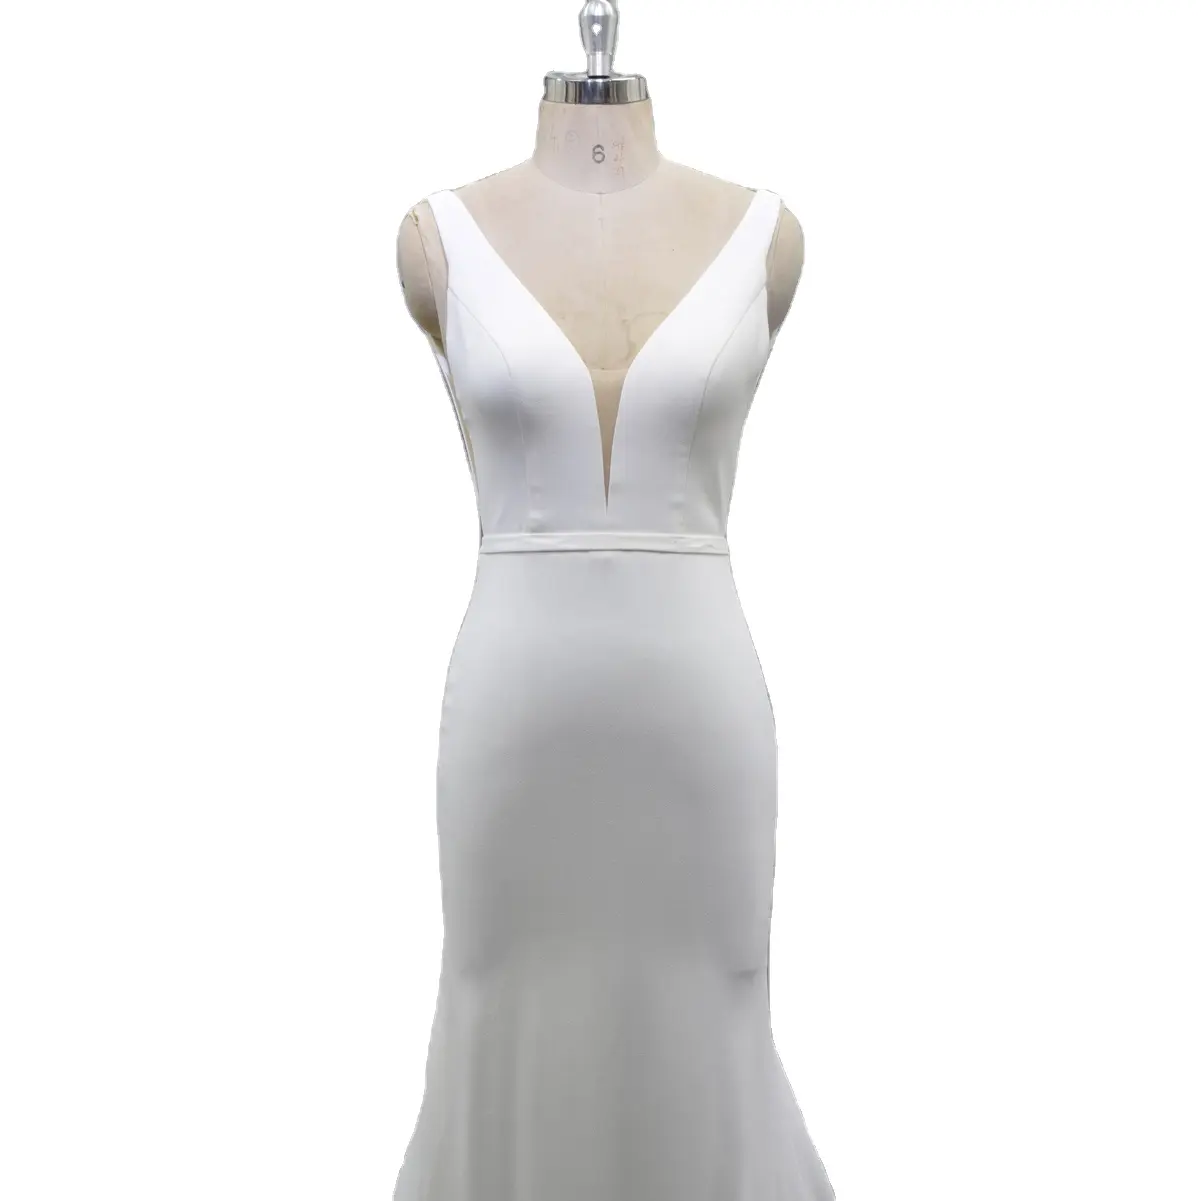 V neckline night back crepe fabric Fashion Simple wedding dress from China